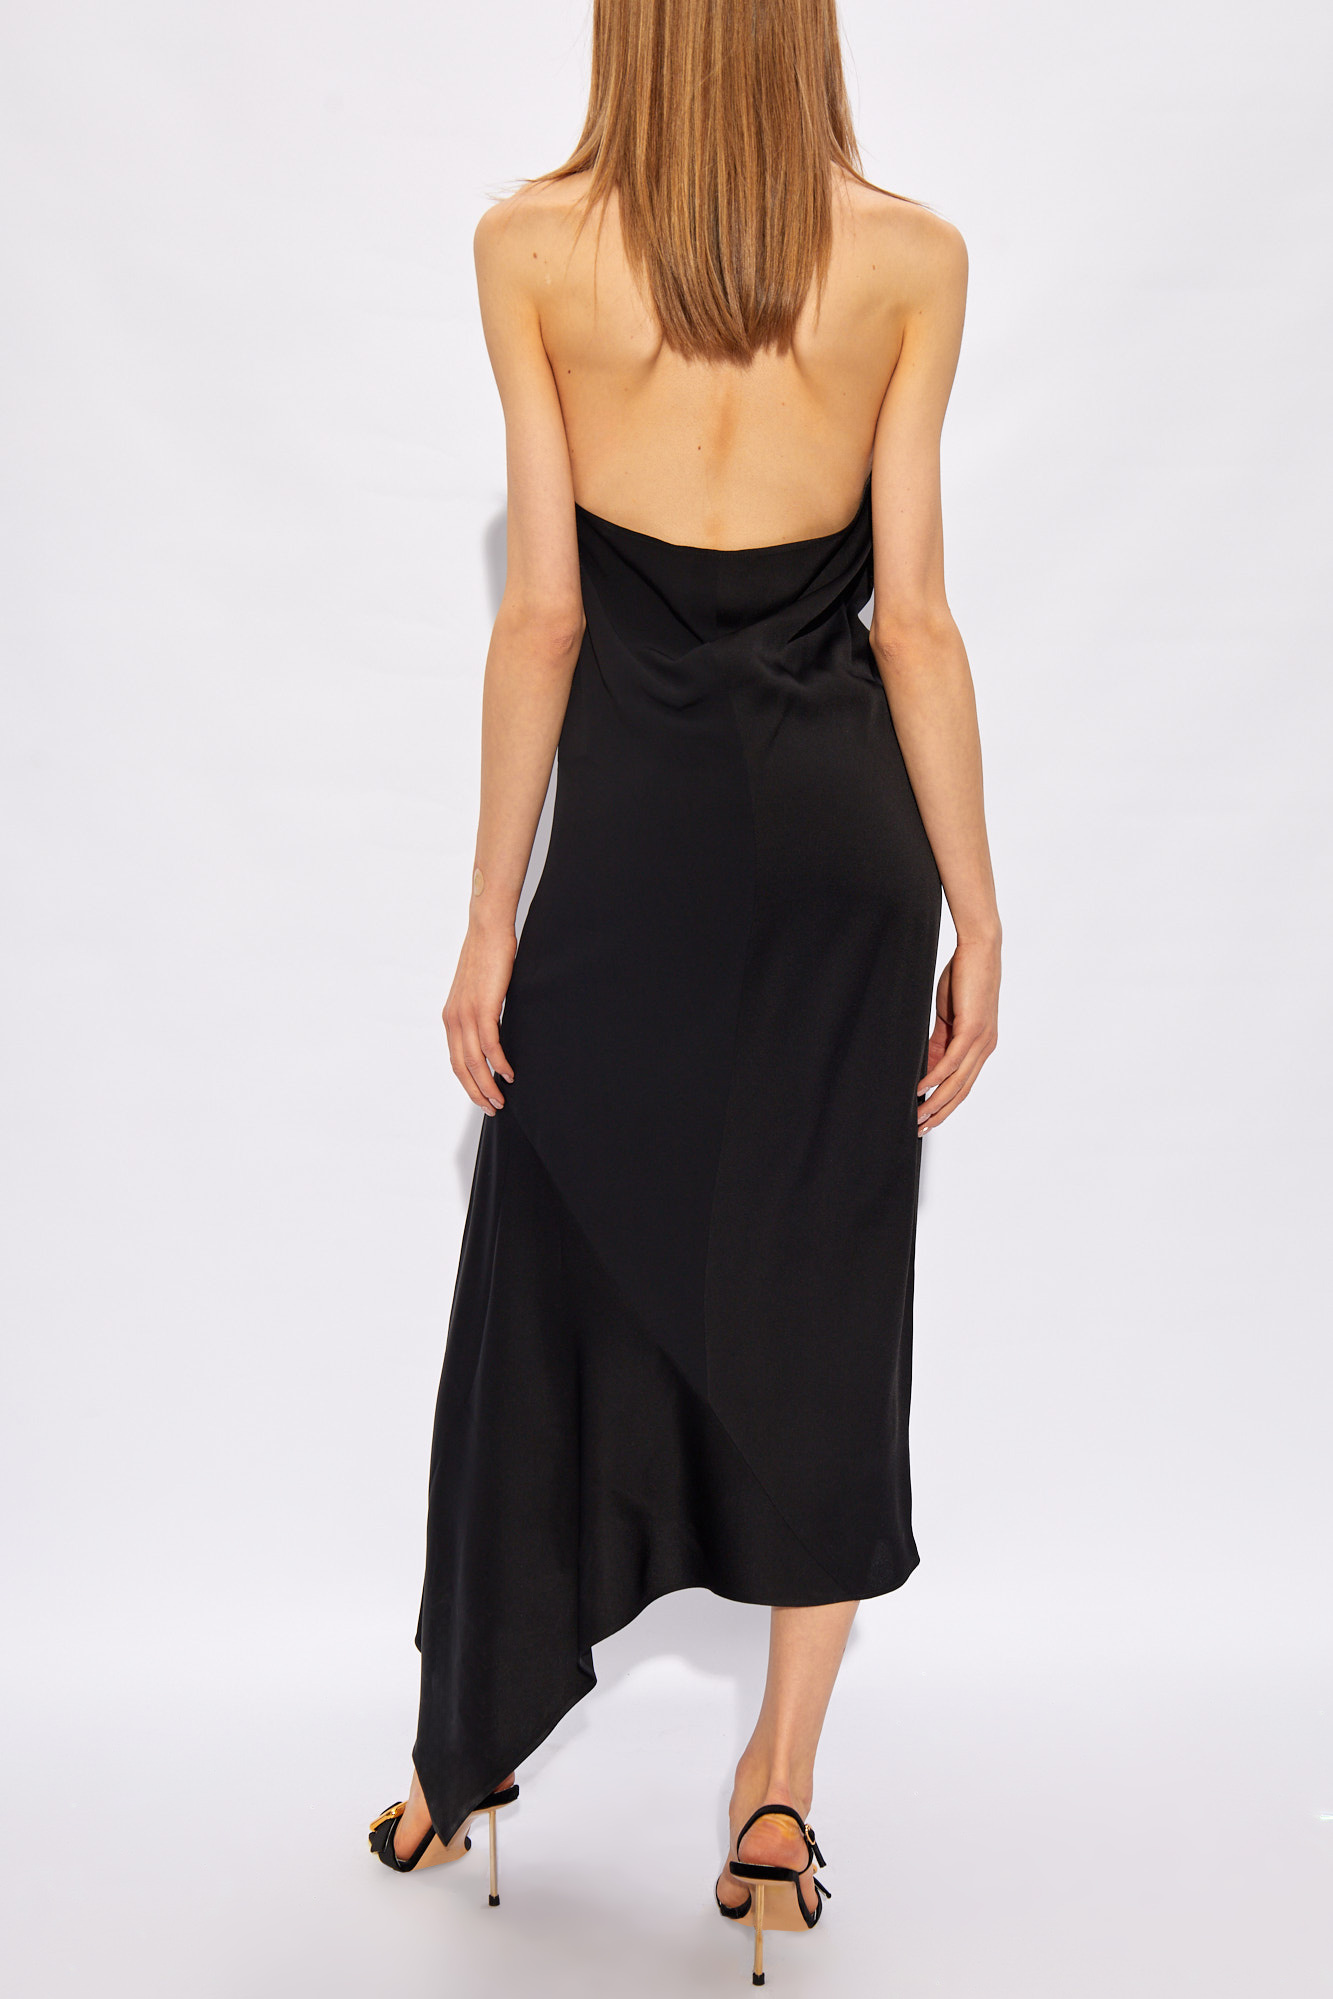 Givenchy Asymmetric dress